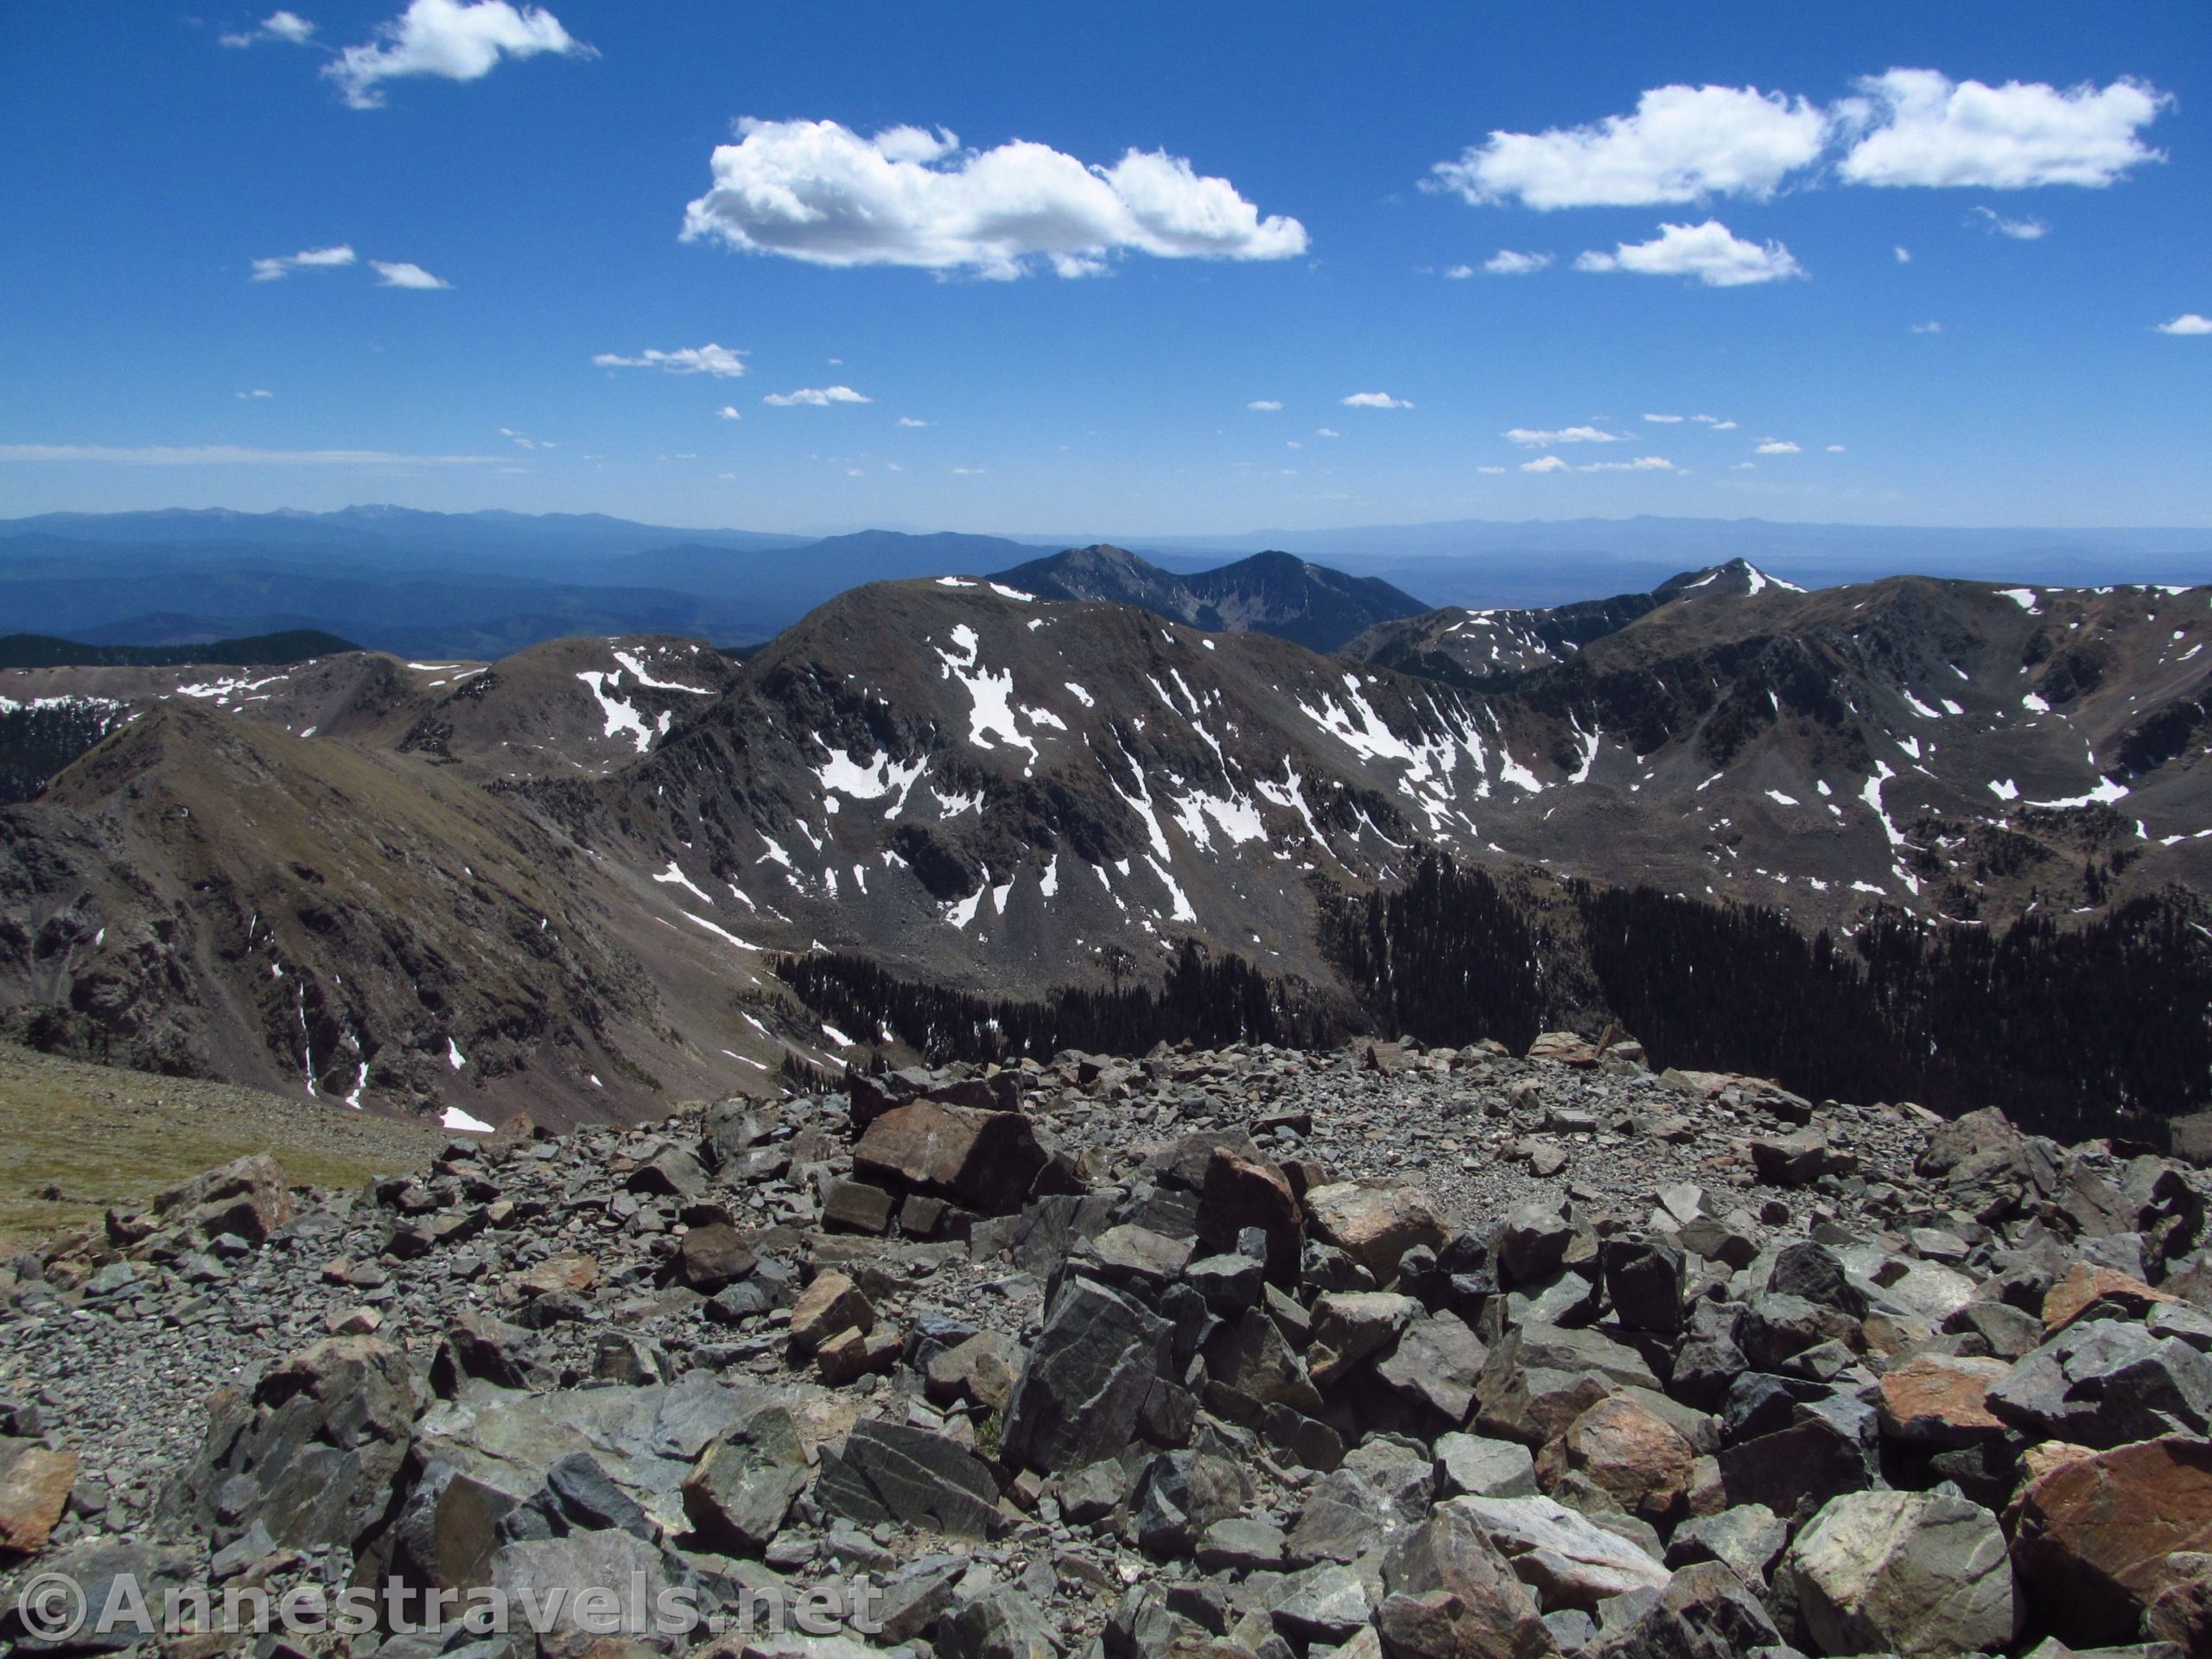 Wheeler Peak – the Highest Peak in New Mexico!